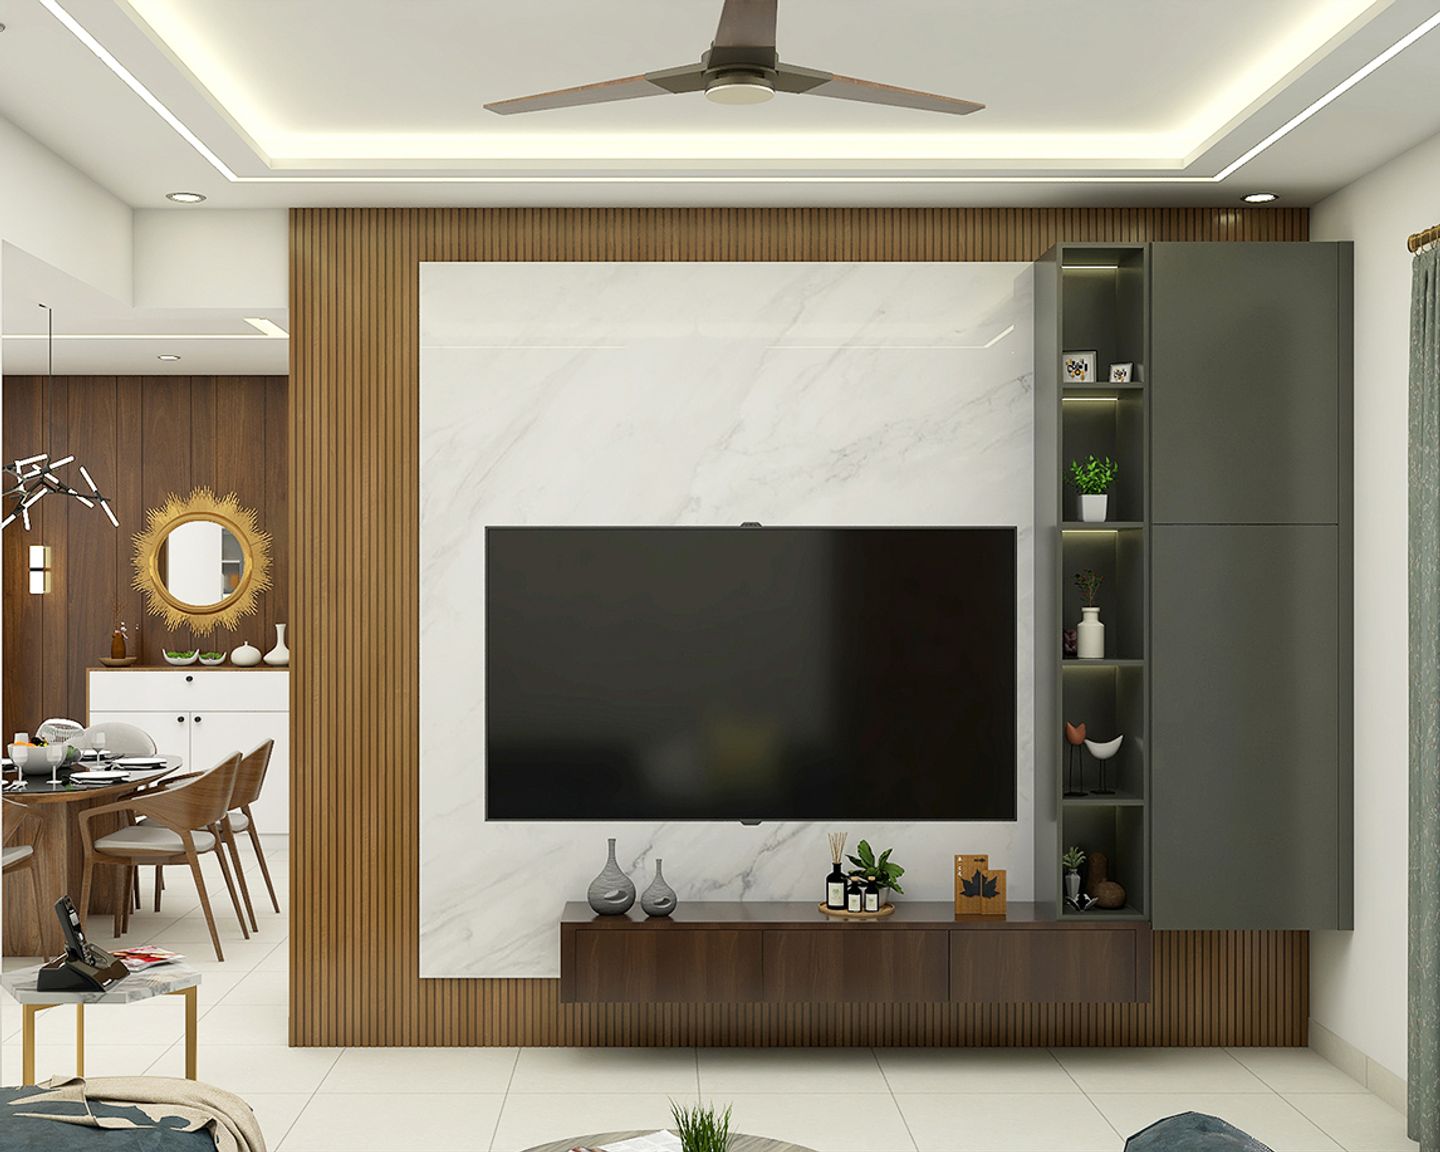 TV Unit Design With Wooden Panels - Livspace